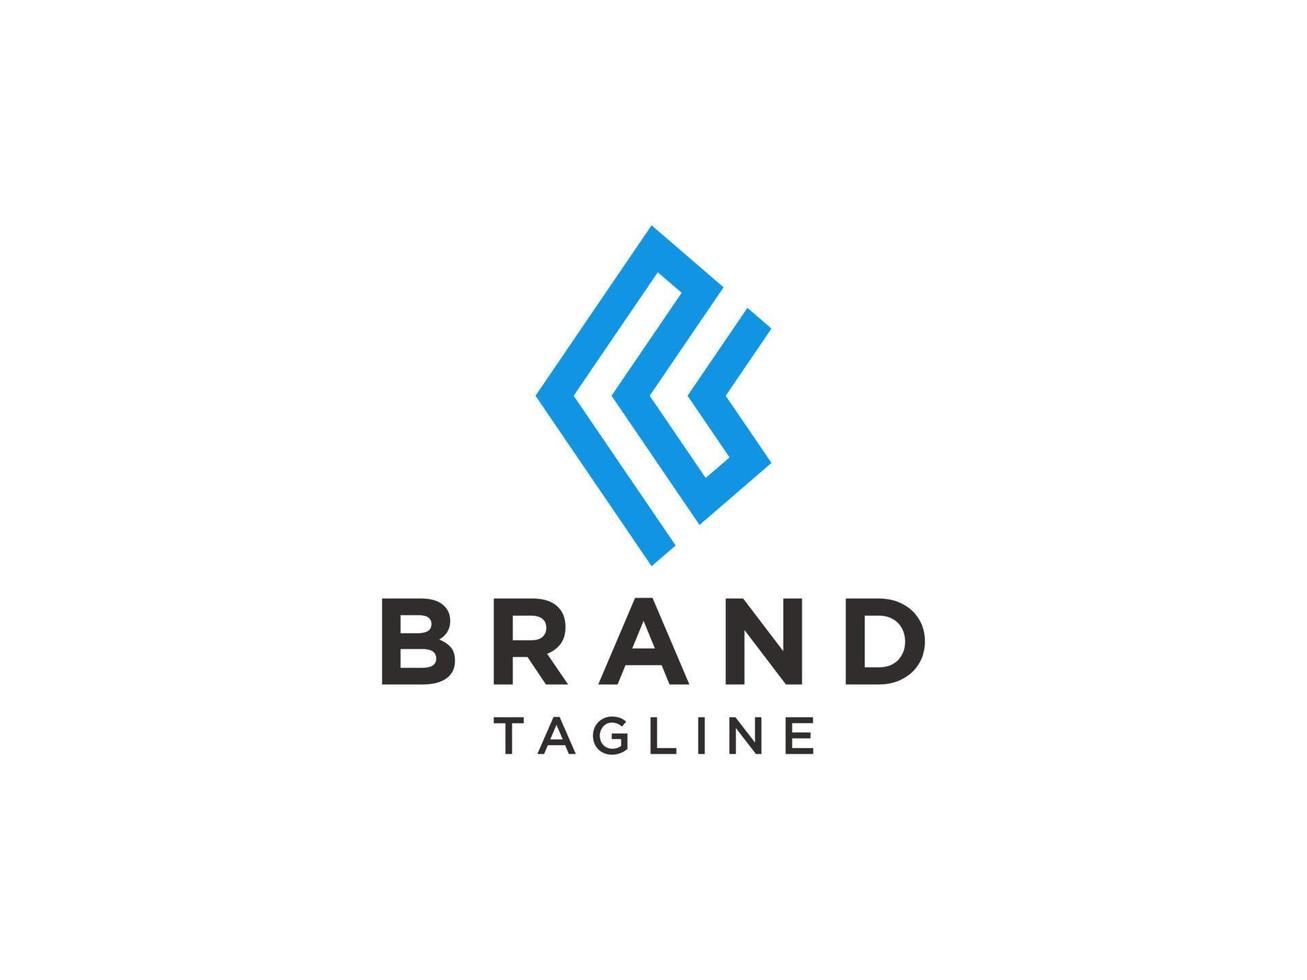 abstrato letra inicial k logotipo. estilo de forma geométrica azul isolado no fundo branco. utilizável para logotipos de negócios e branding. elemento de modelo de design de logotipo de vetor plana.